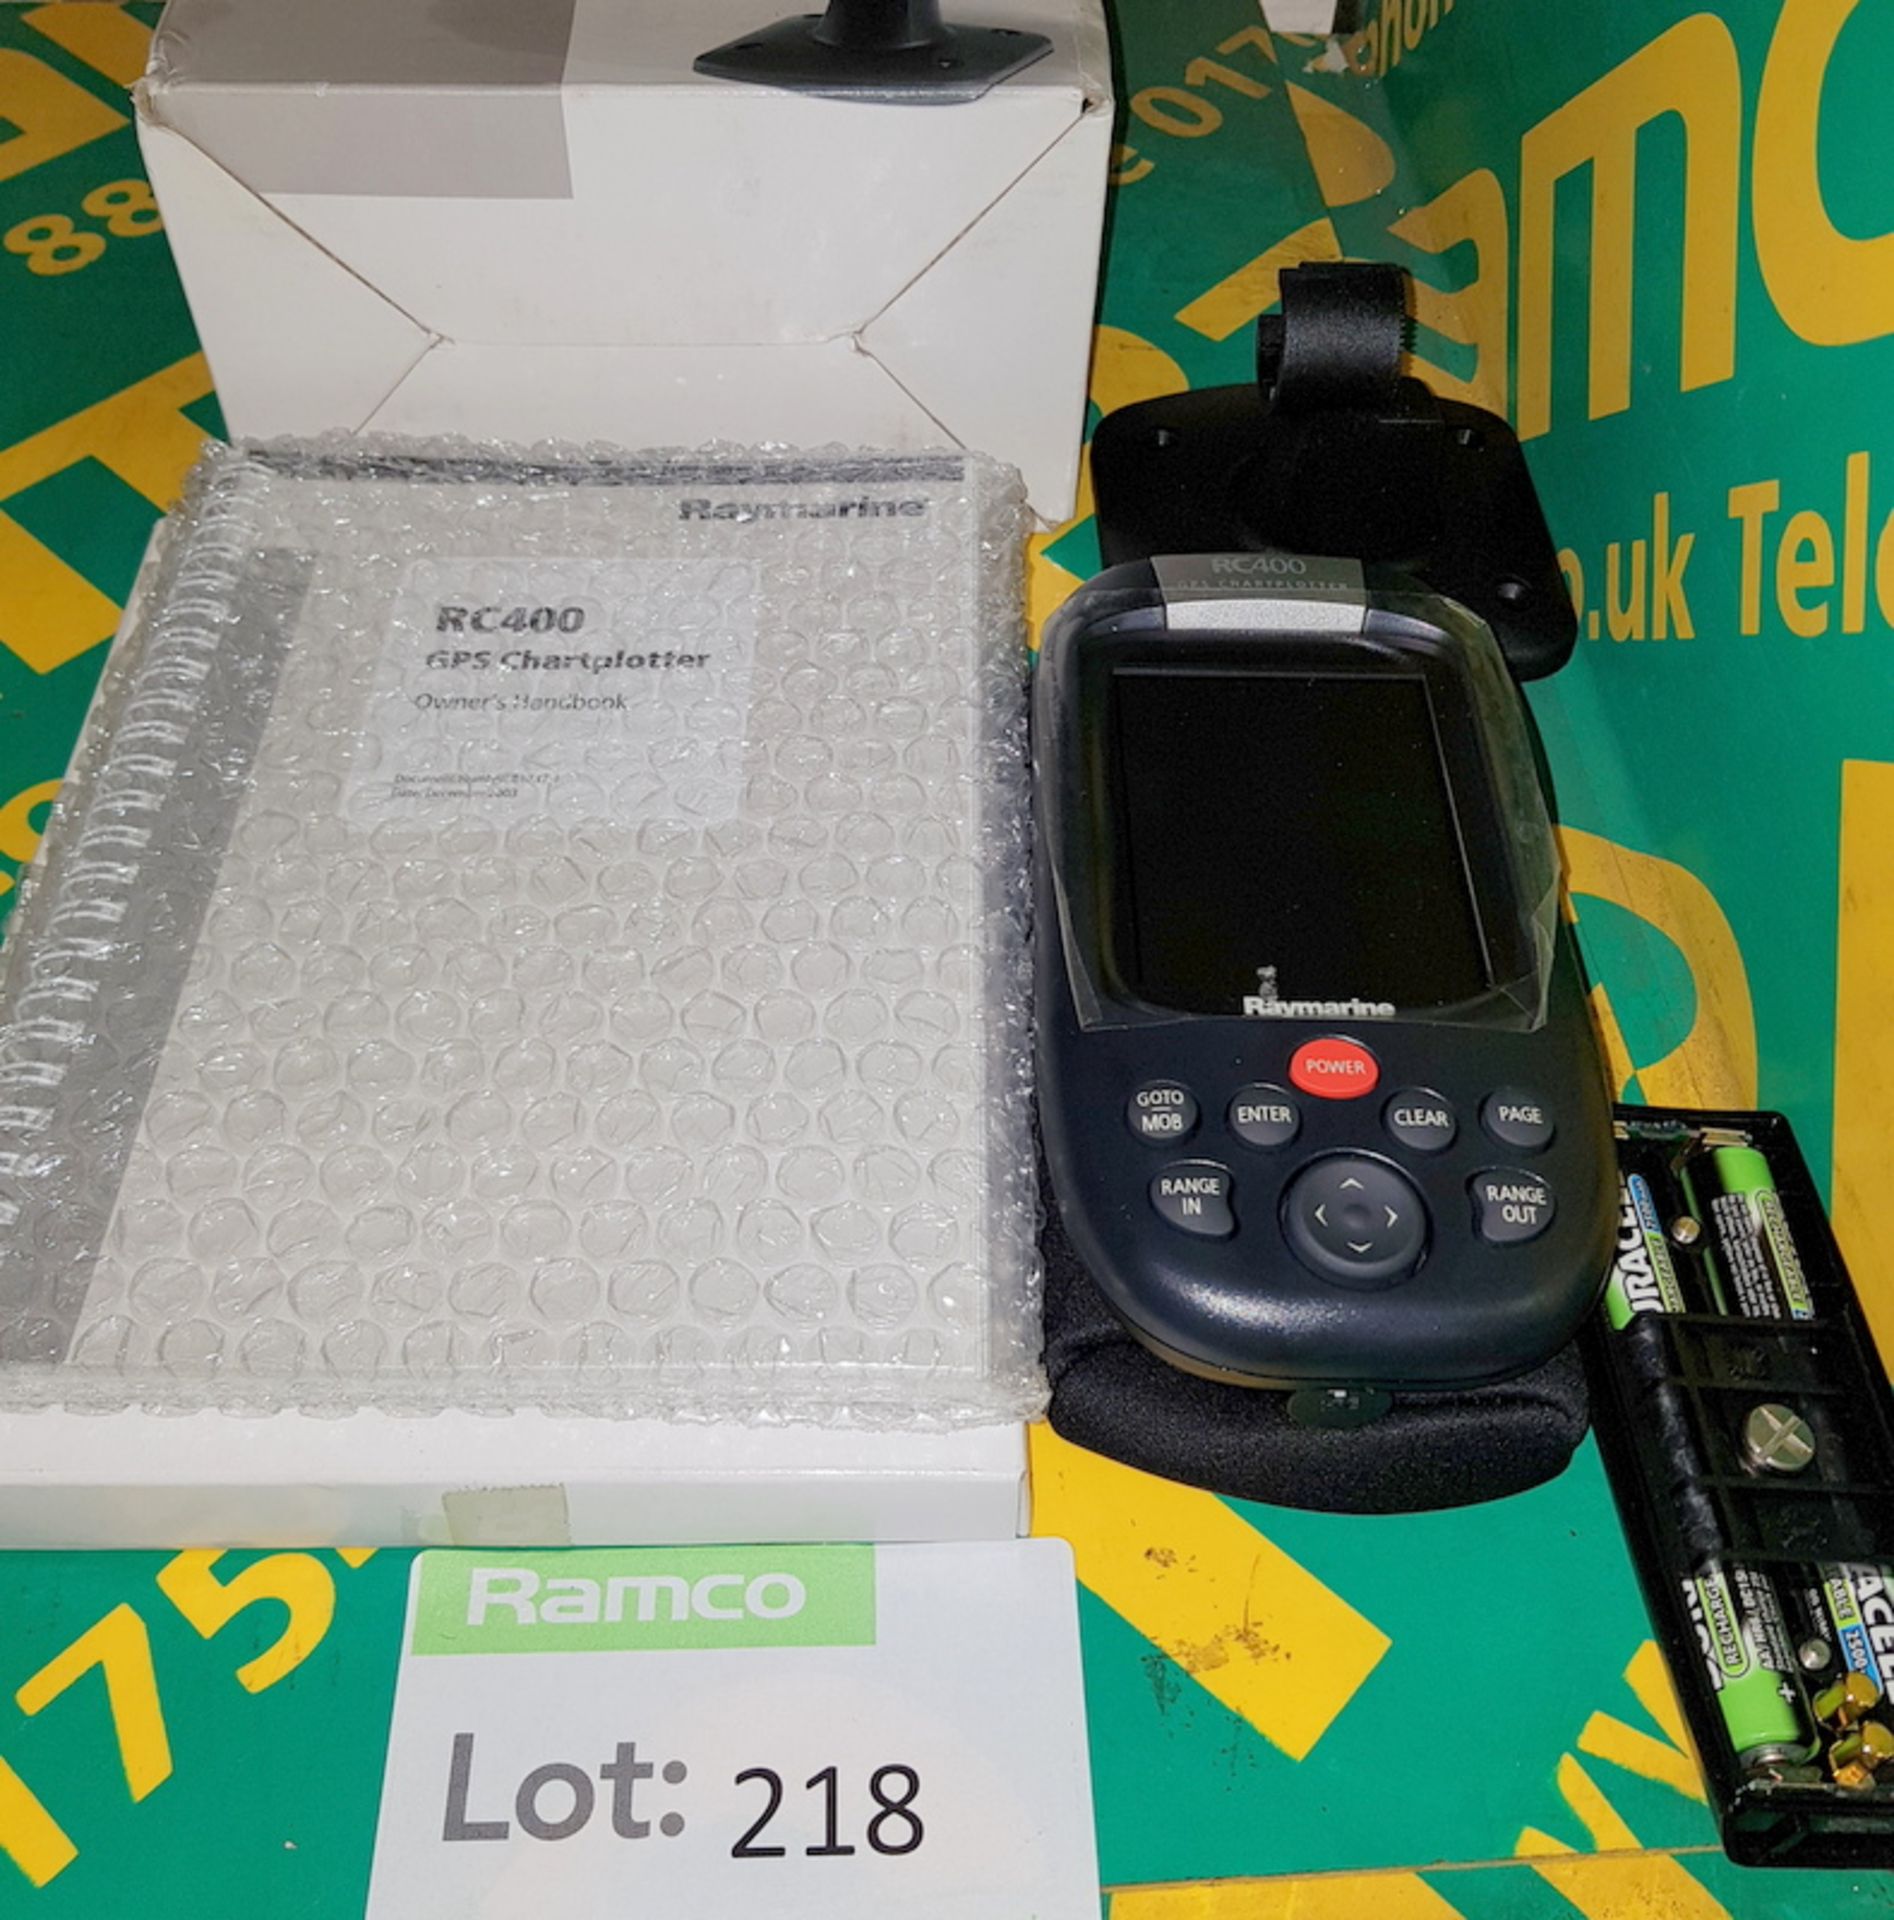 Raymarine RC400 Portable GPS Chartplotter